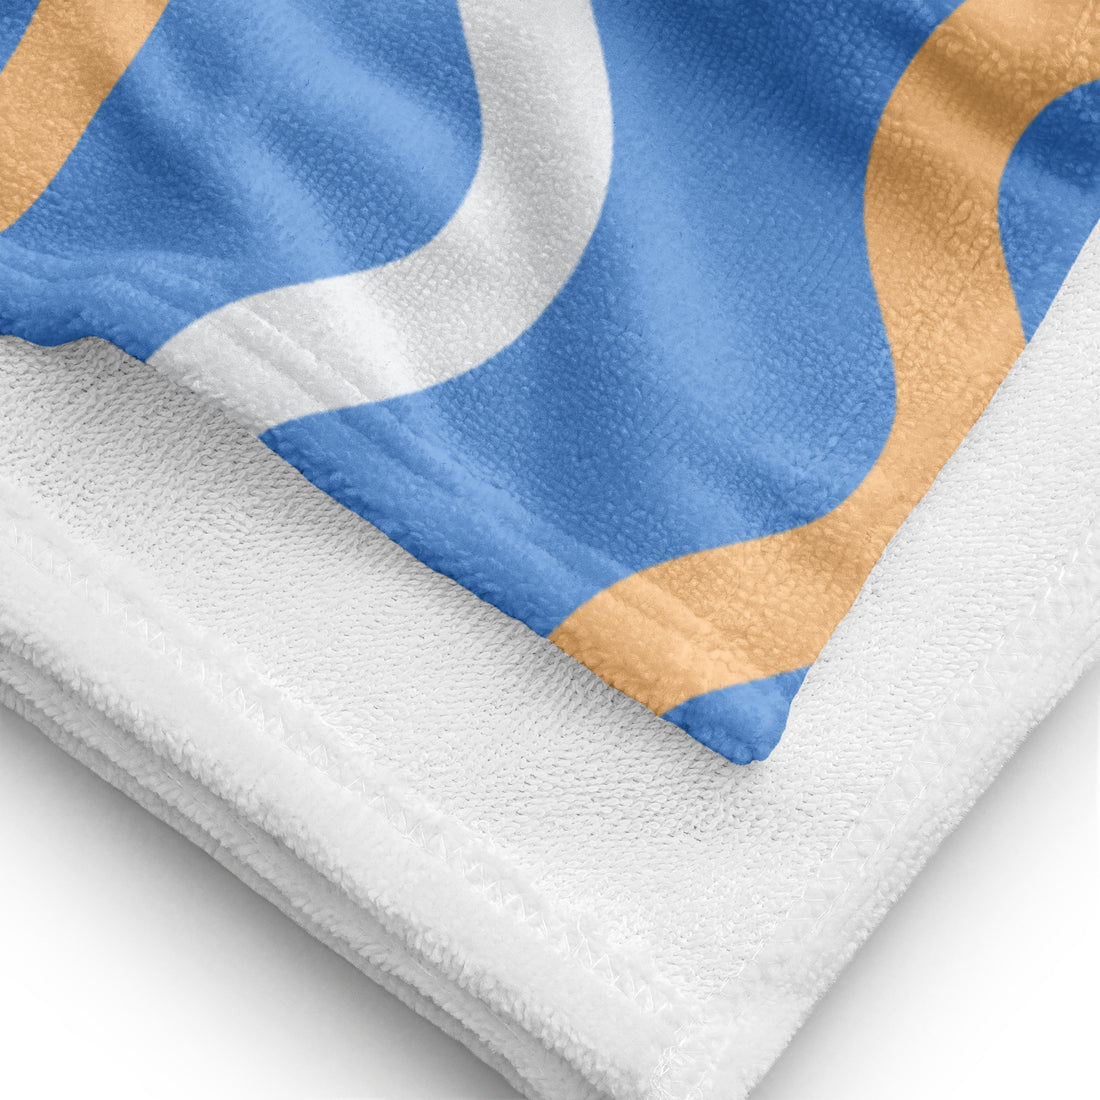 Guidepost Promo - Summer Towel